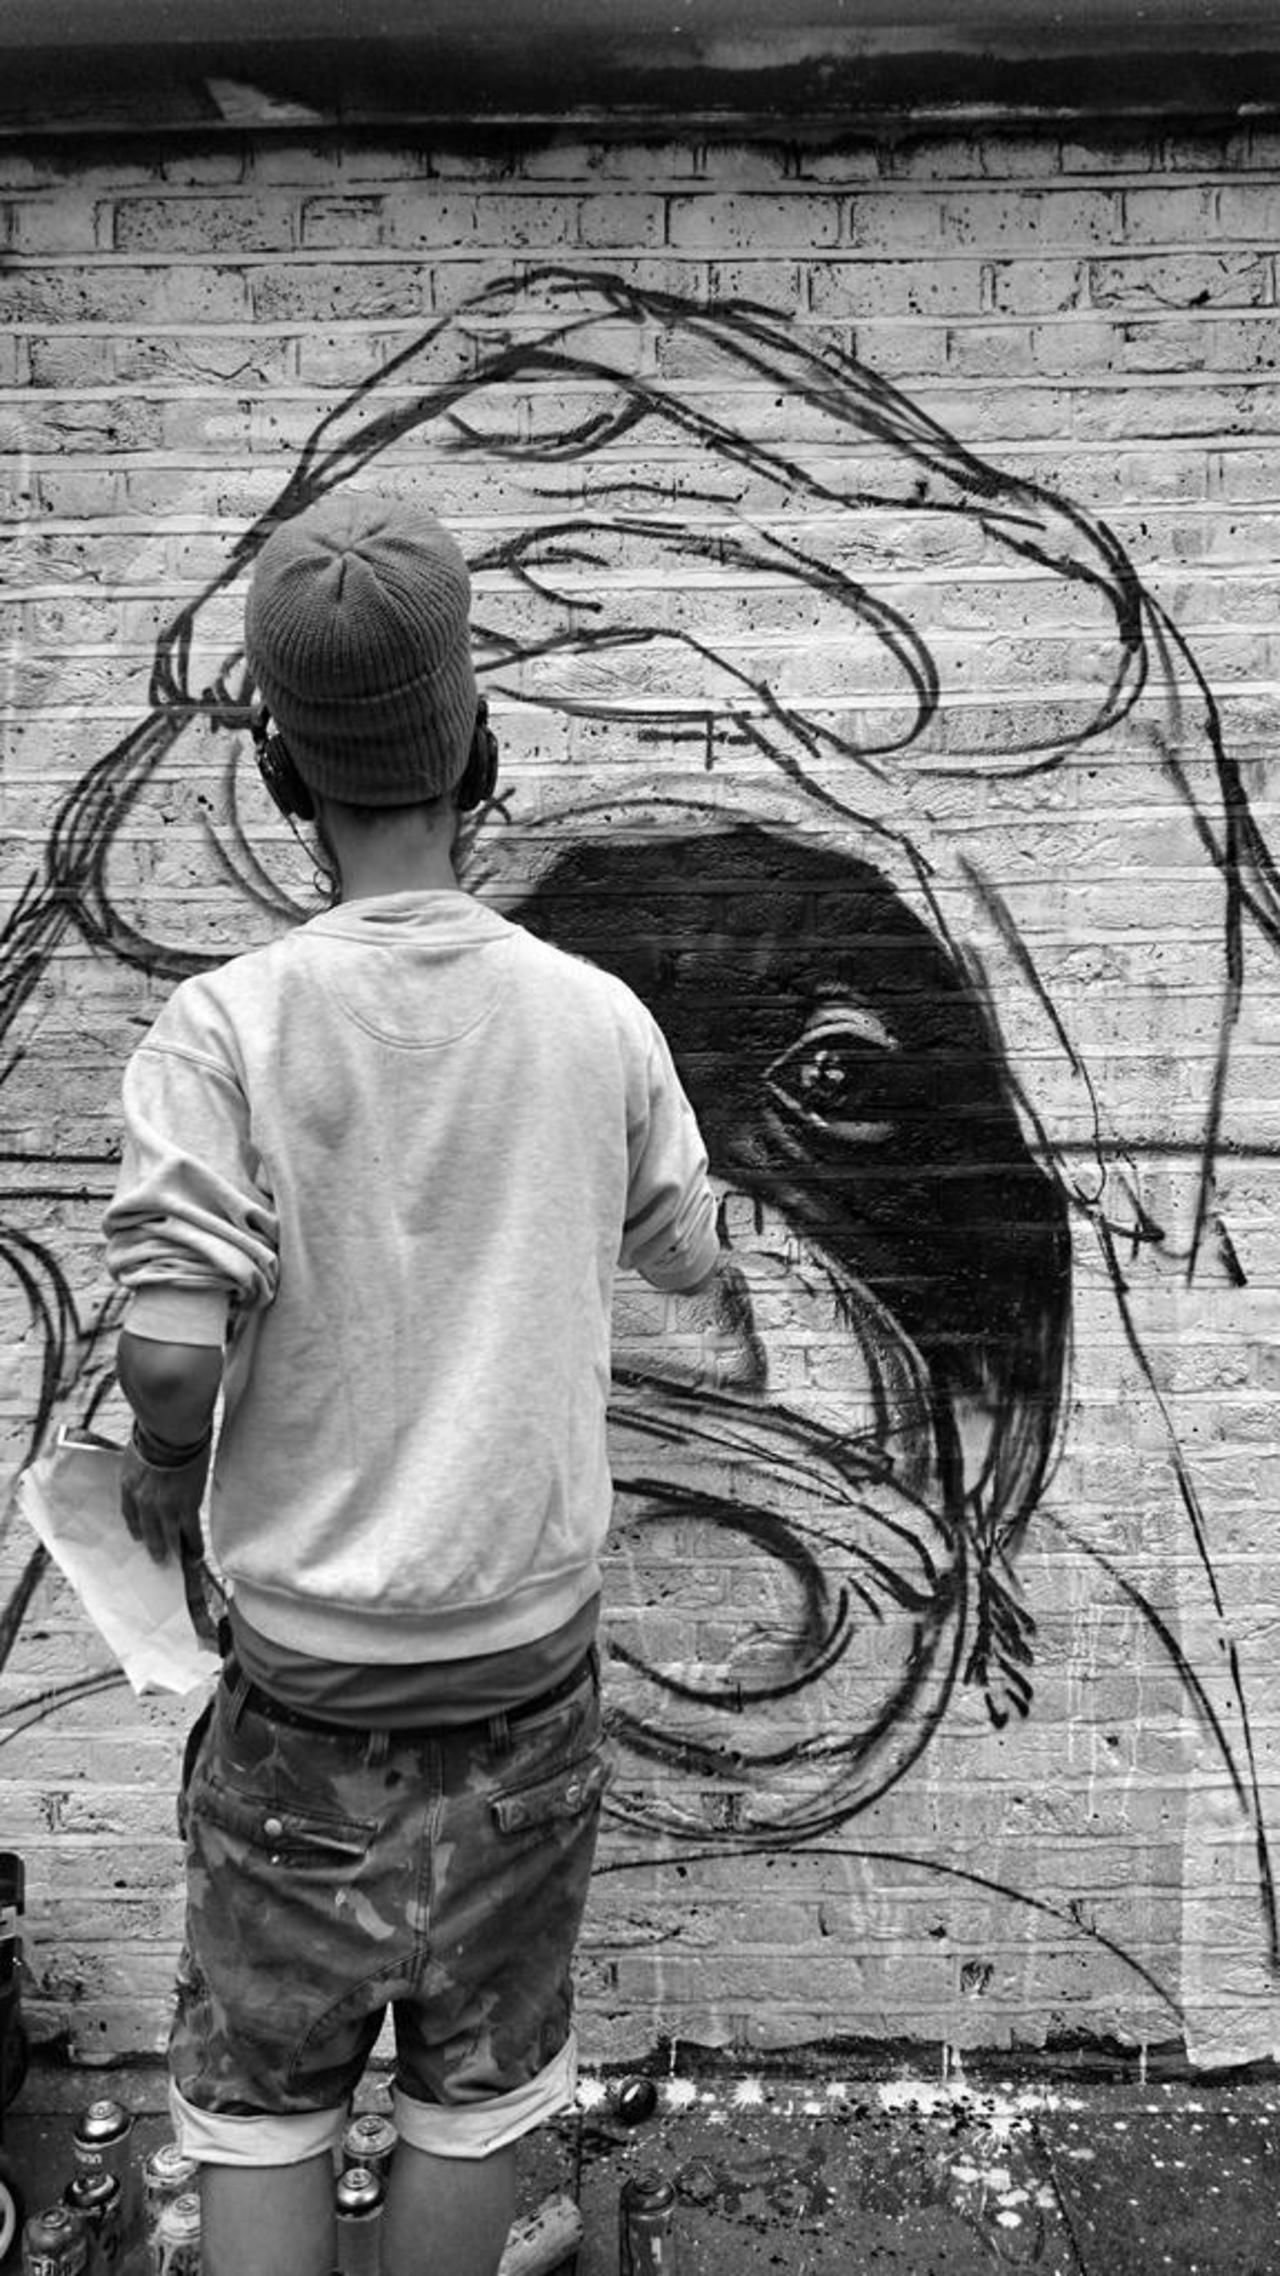 #streetart #art #graffiti #urban #london #loveLondon #streetphotography #blackandwhitephotography #Shoreditch #mos http://t.co/fHO3V9XJtn